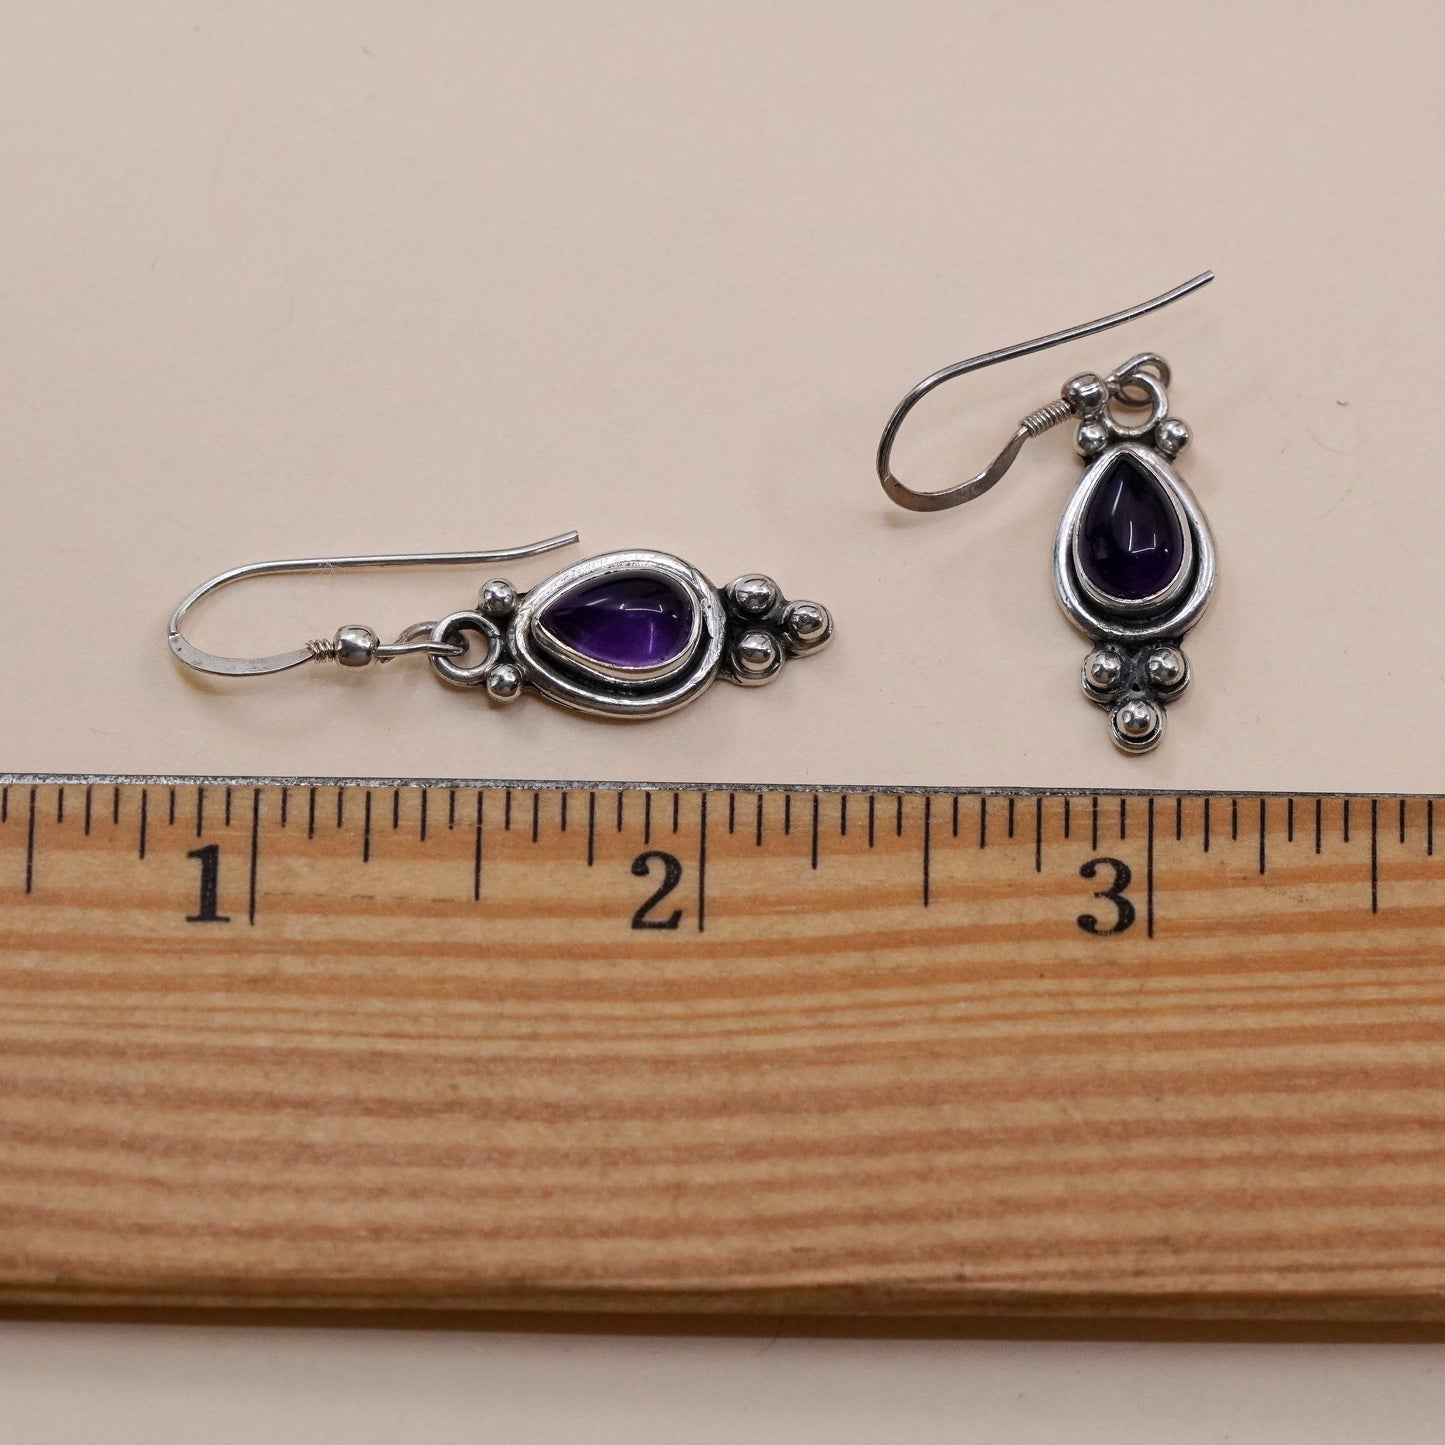 Vintage sterling 925 silver handmade earrings with teardrop amethyst and beads